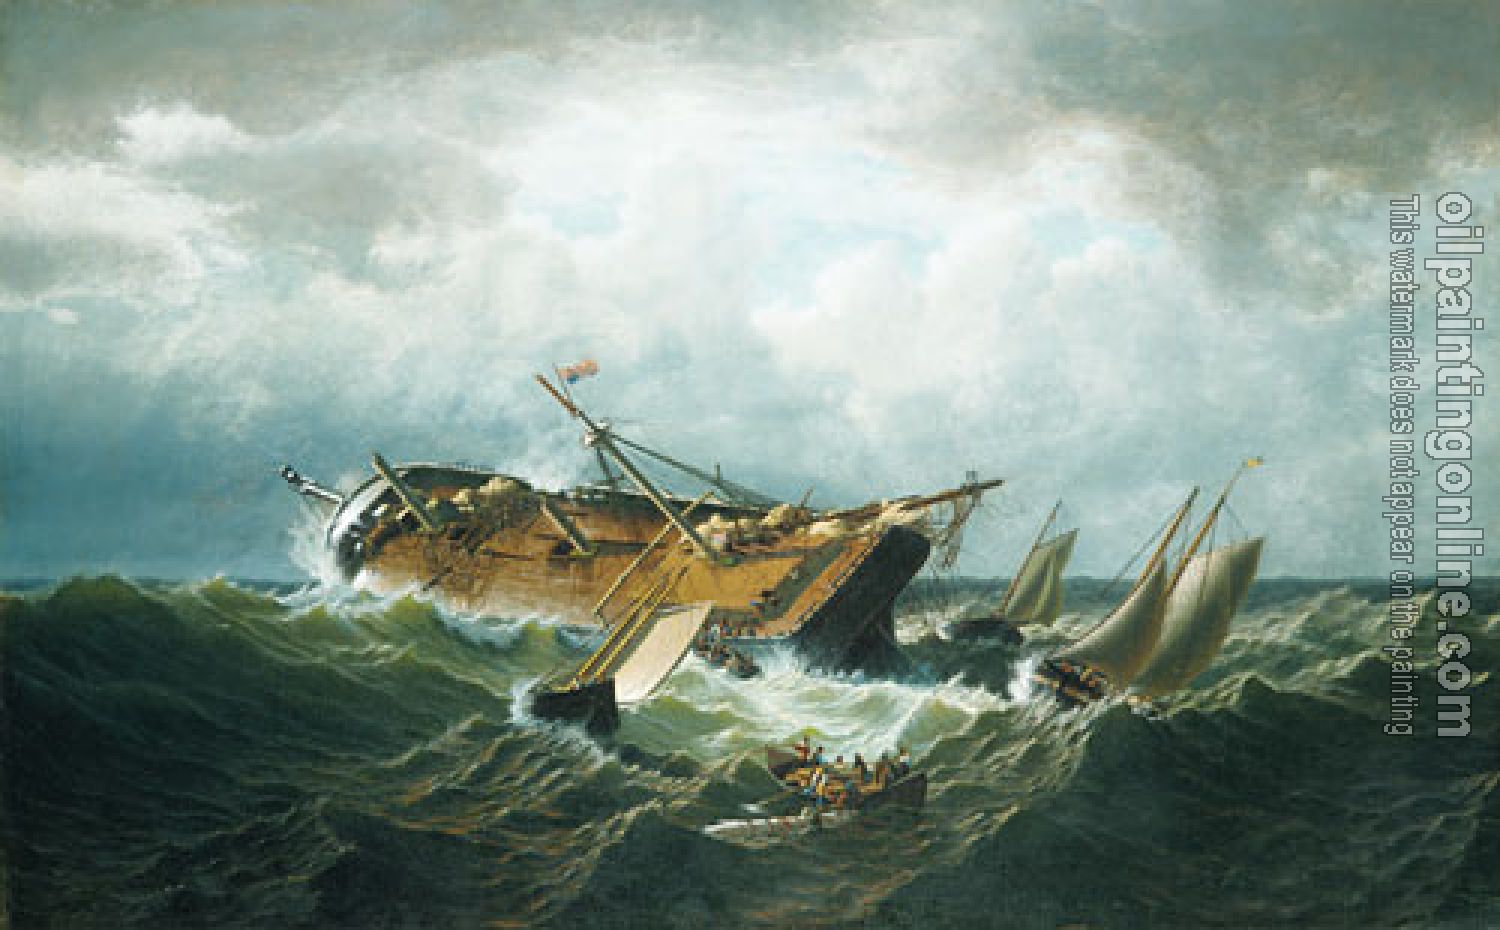 William Bradford - Shipwreck Off Nantucket